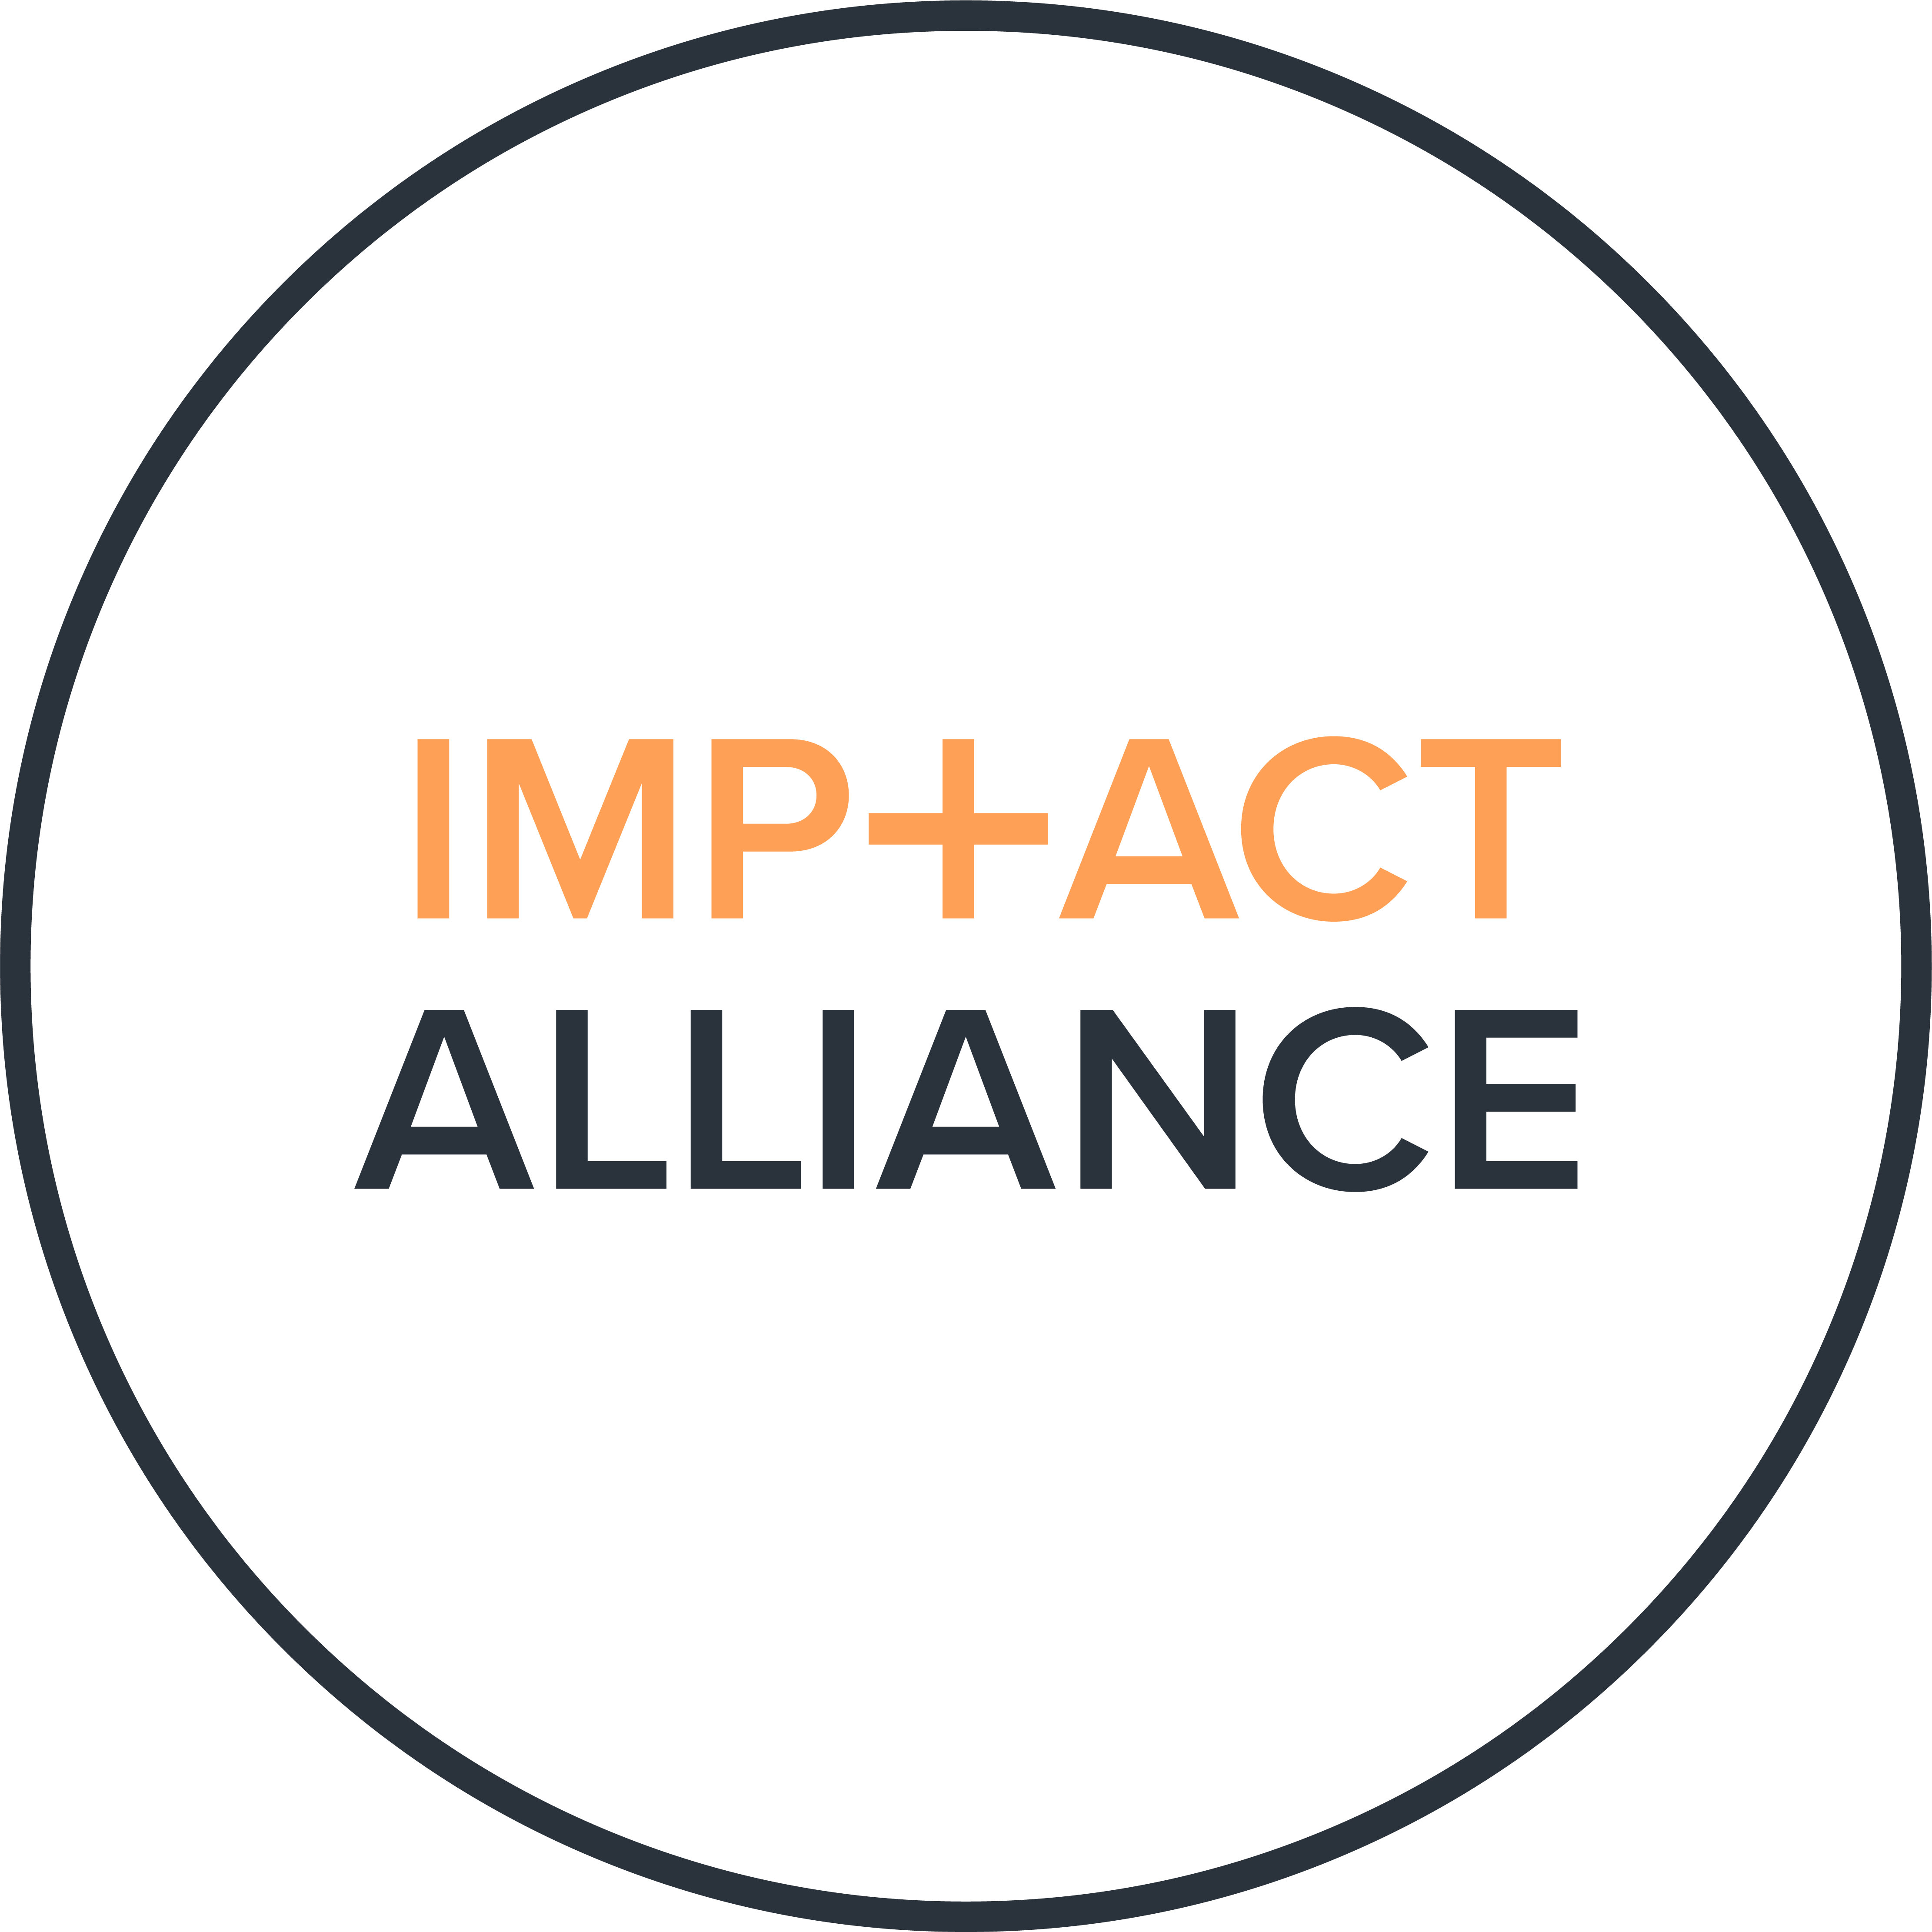 The IMP+ACT Alliance, Bridges Fund Management